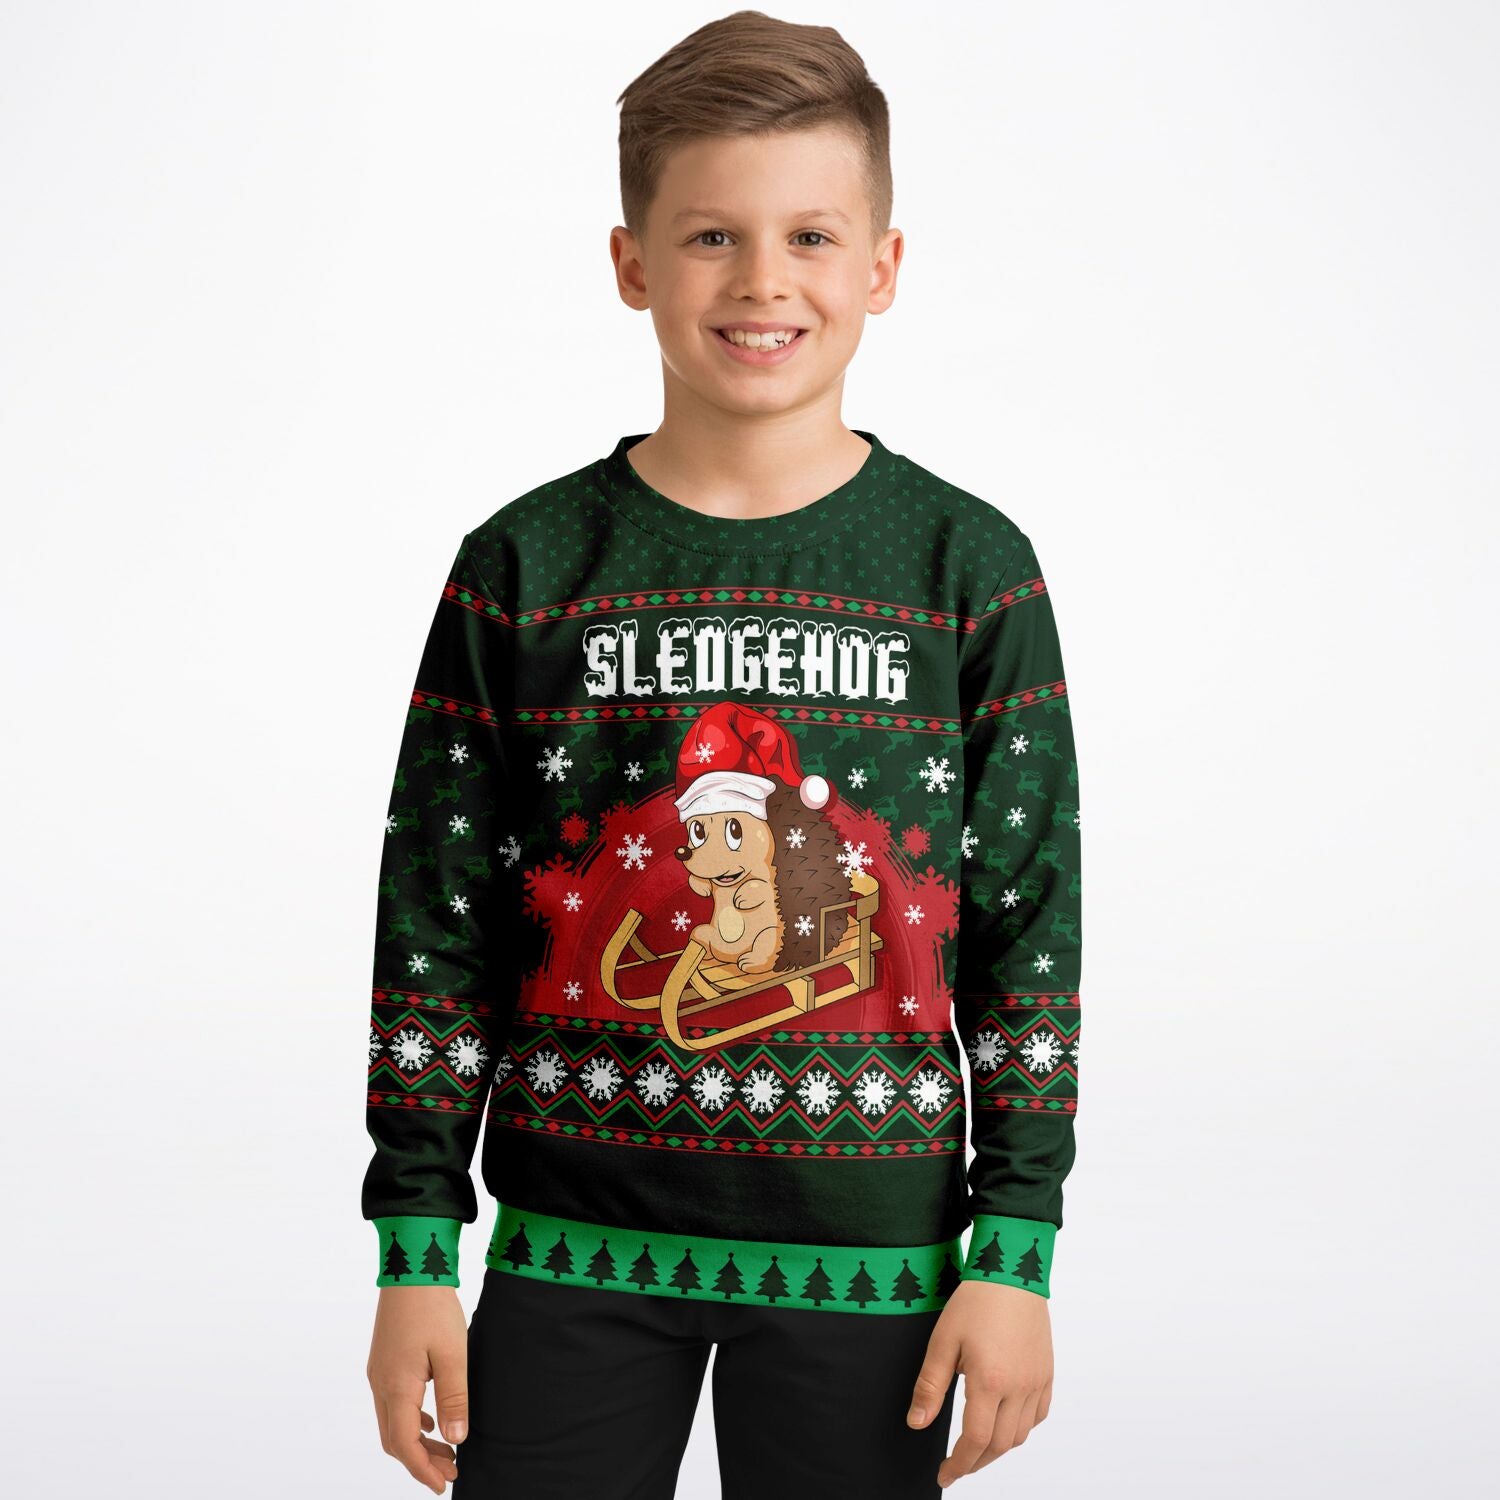 Sledge-hog Fashion Kids/Youth Sweatshirt